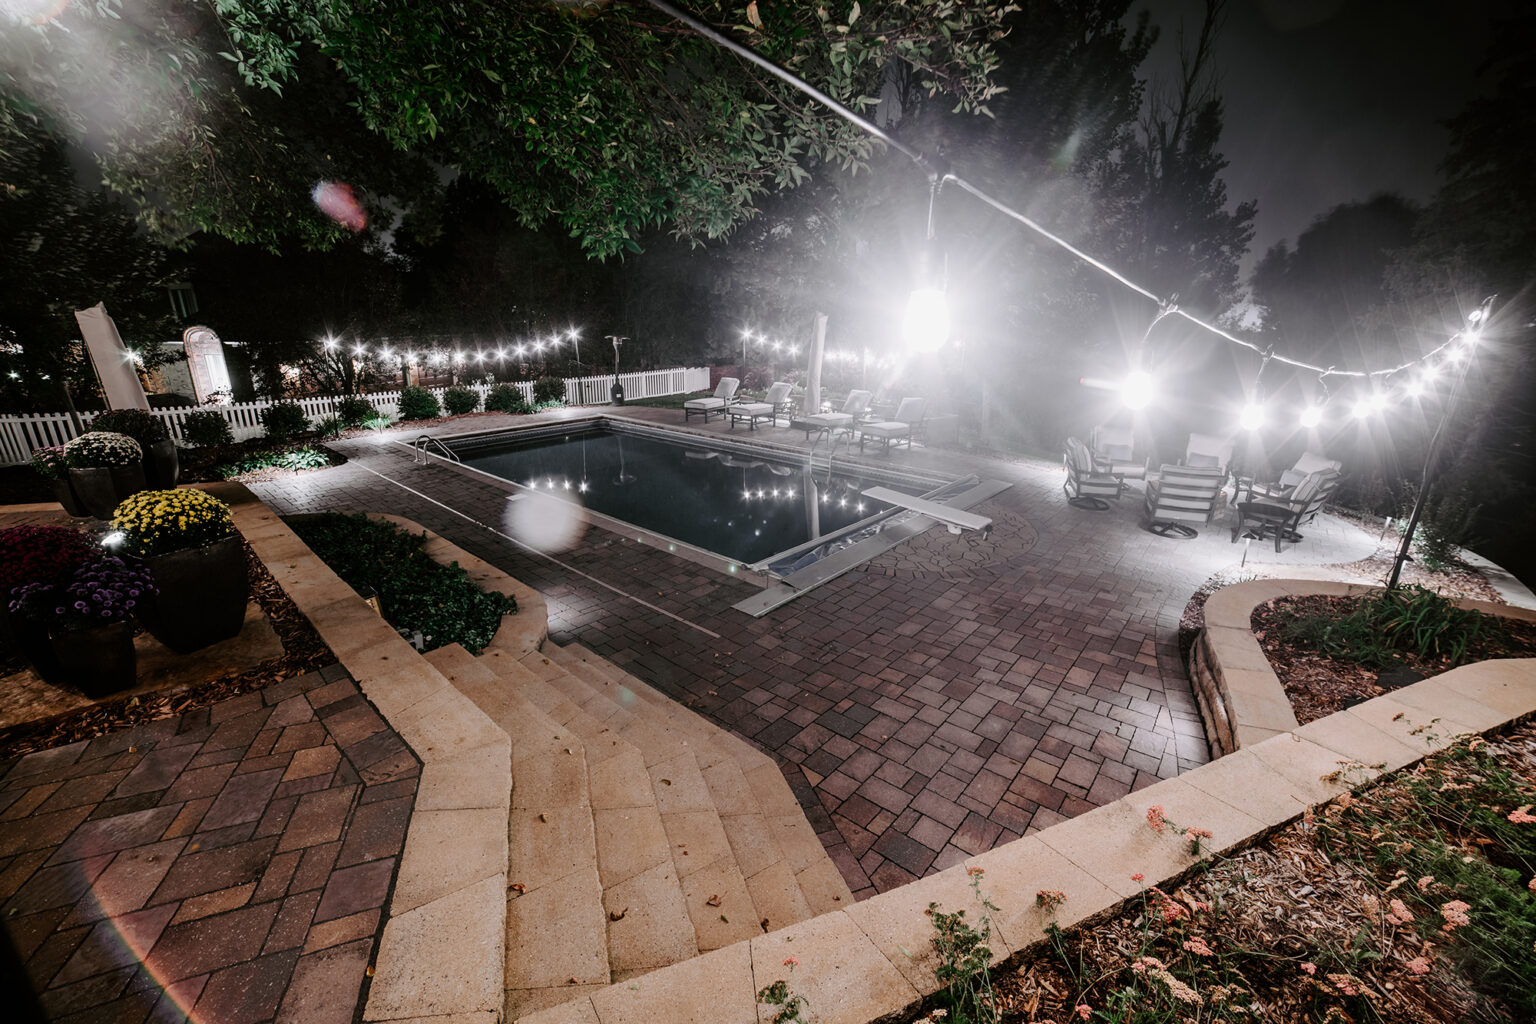 lit backyard pool at night